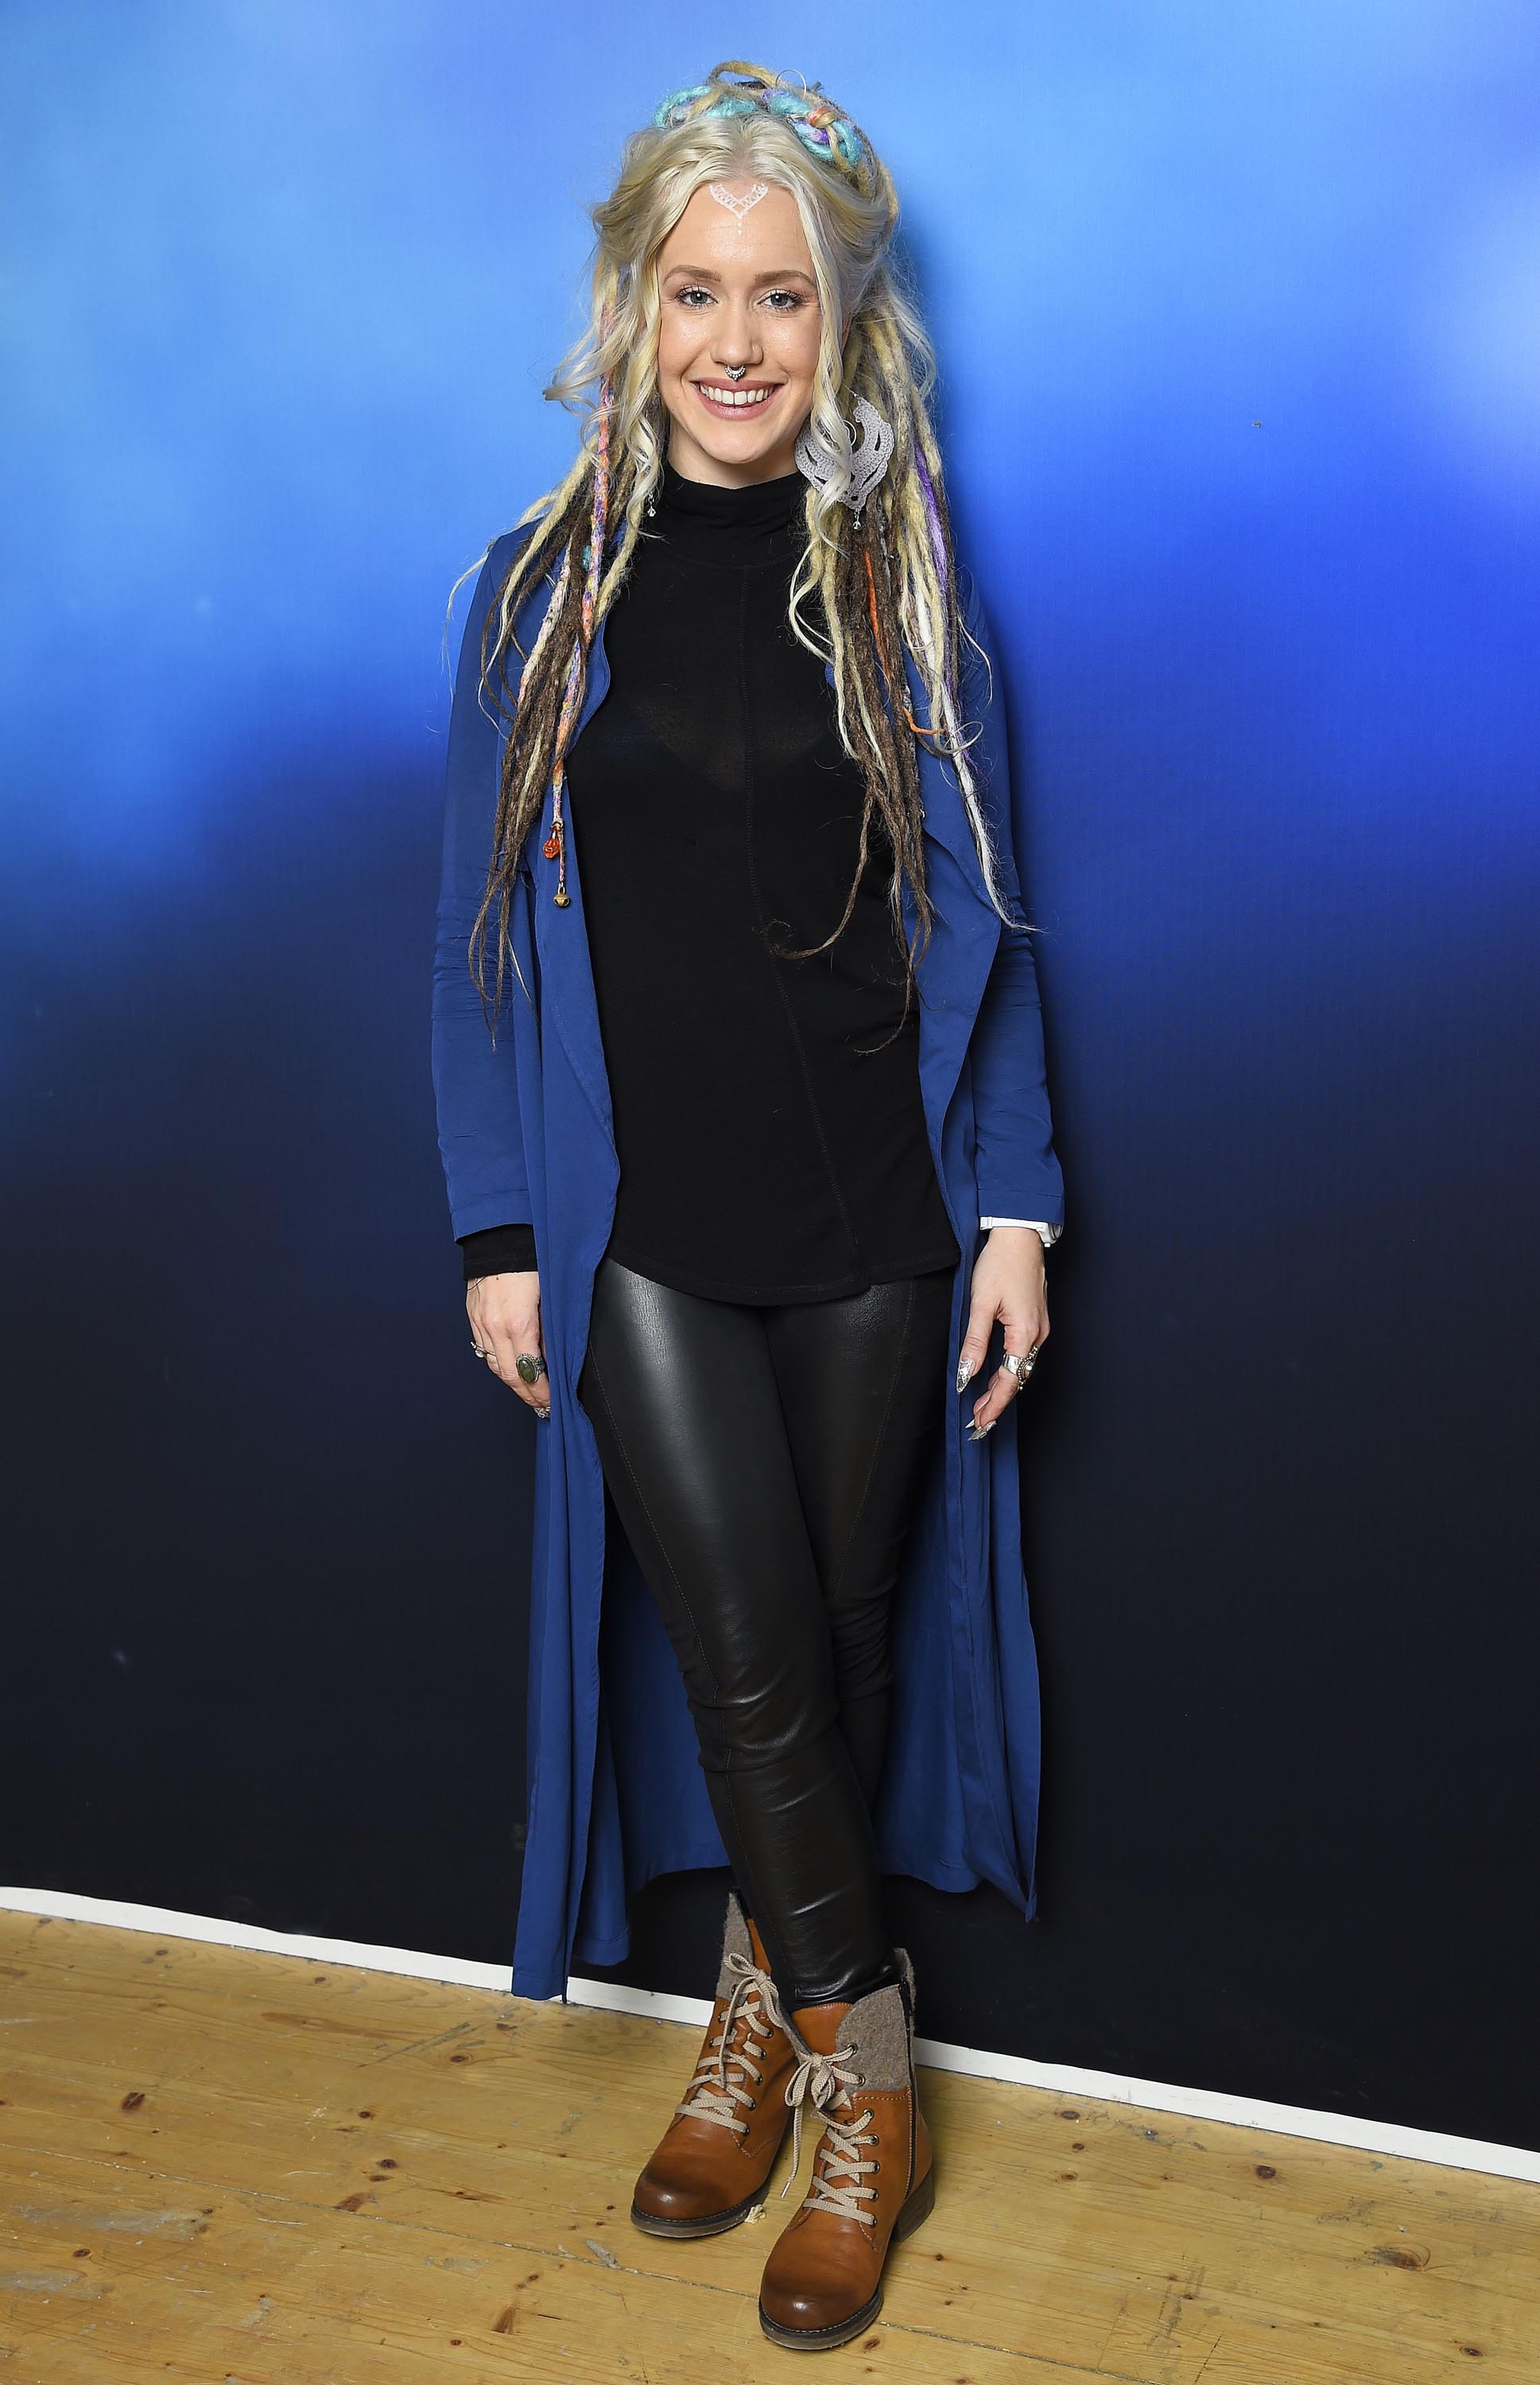 Aninia attends Melodifestivalen